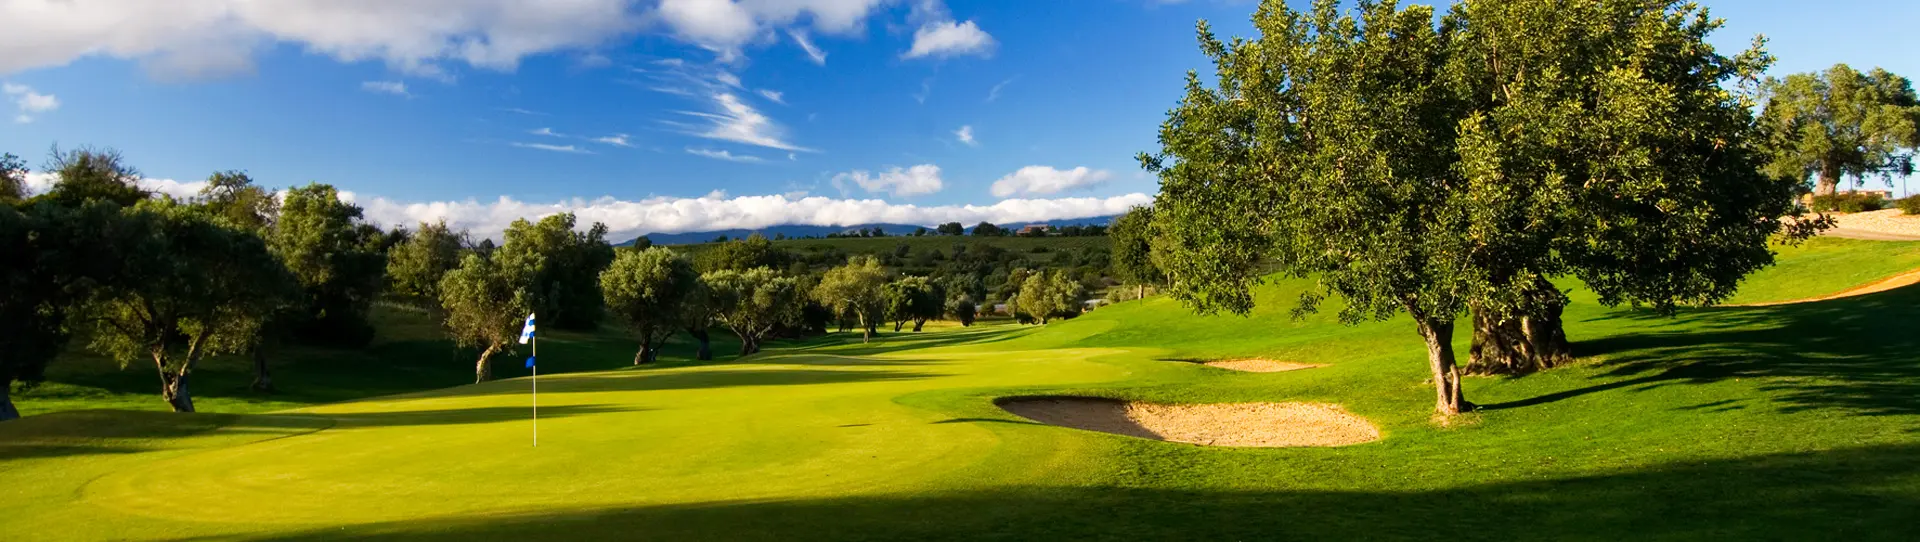 Portugal golf courses - Vale da Pinta Golf Course - Photo 1